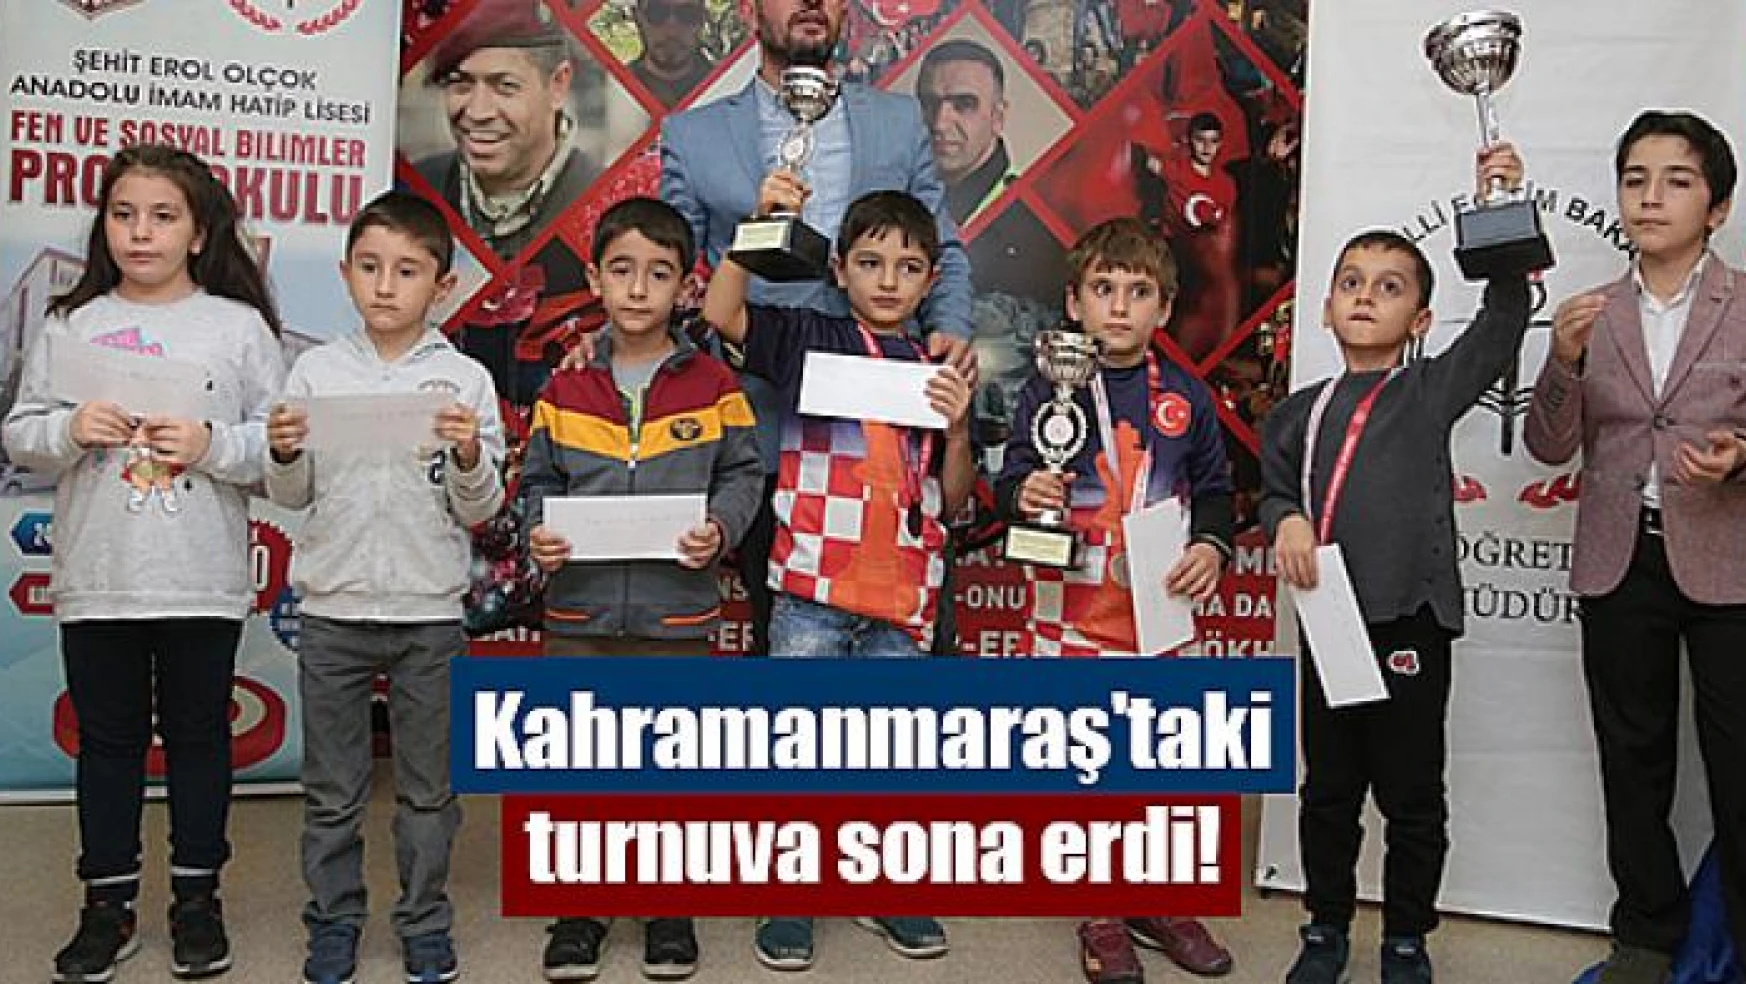 Kahramanmaraş'taki turnuva sona erdi!